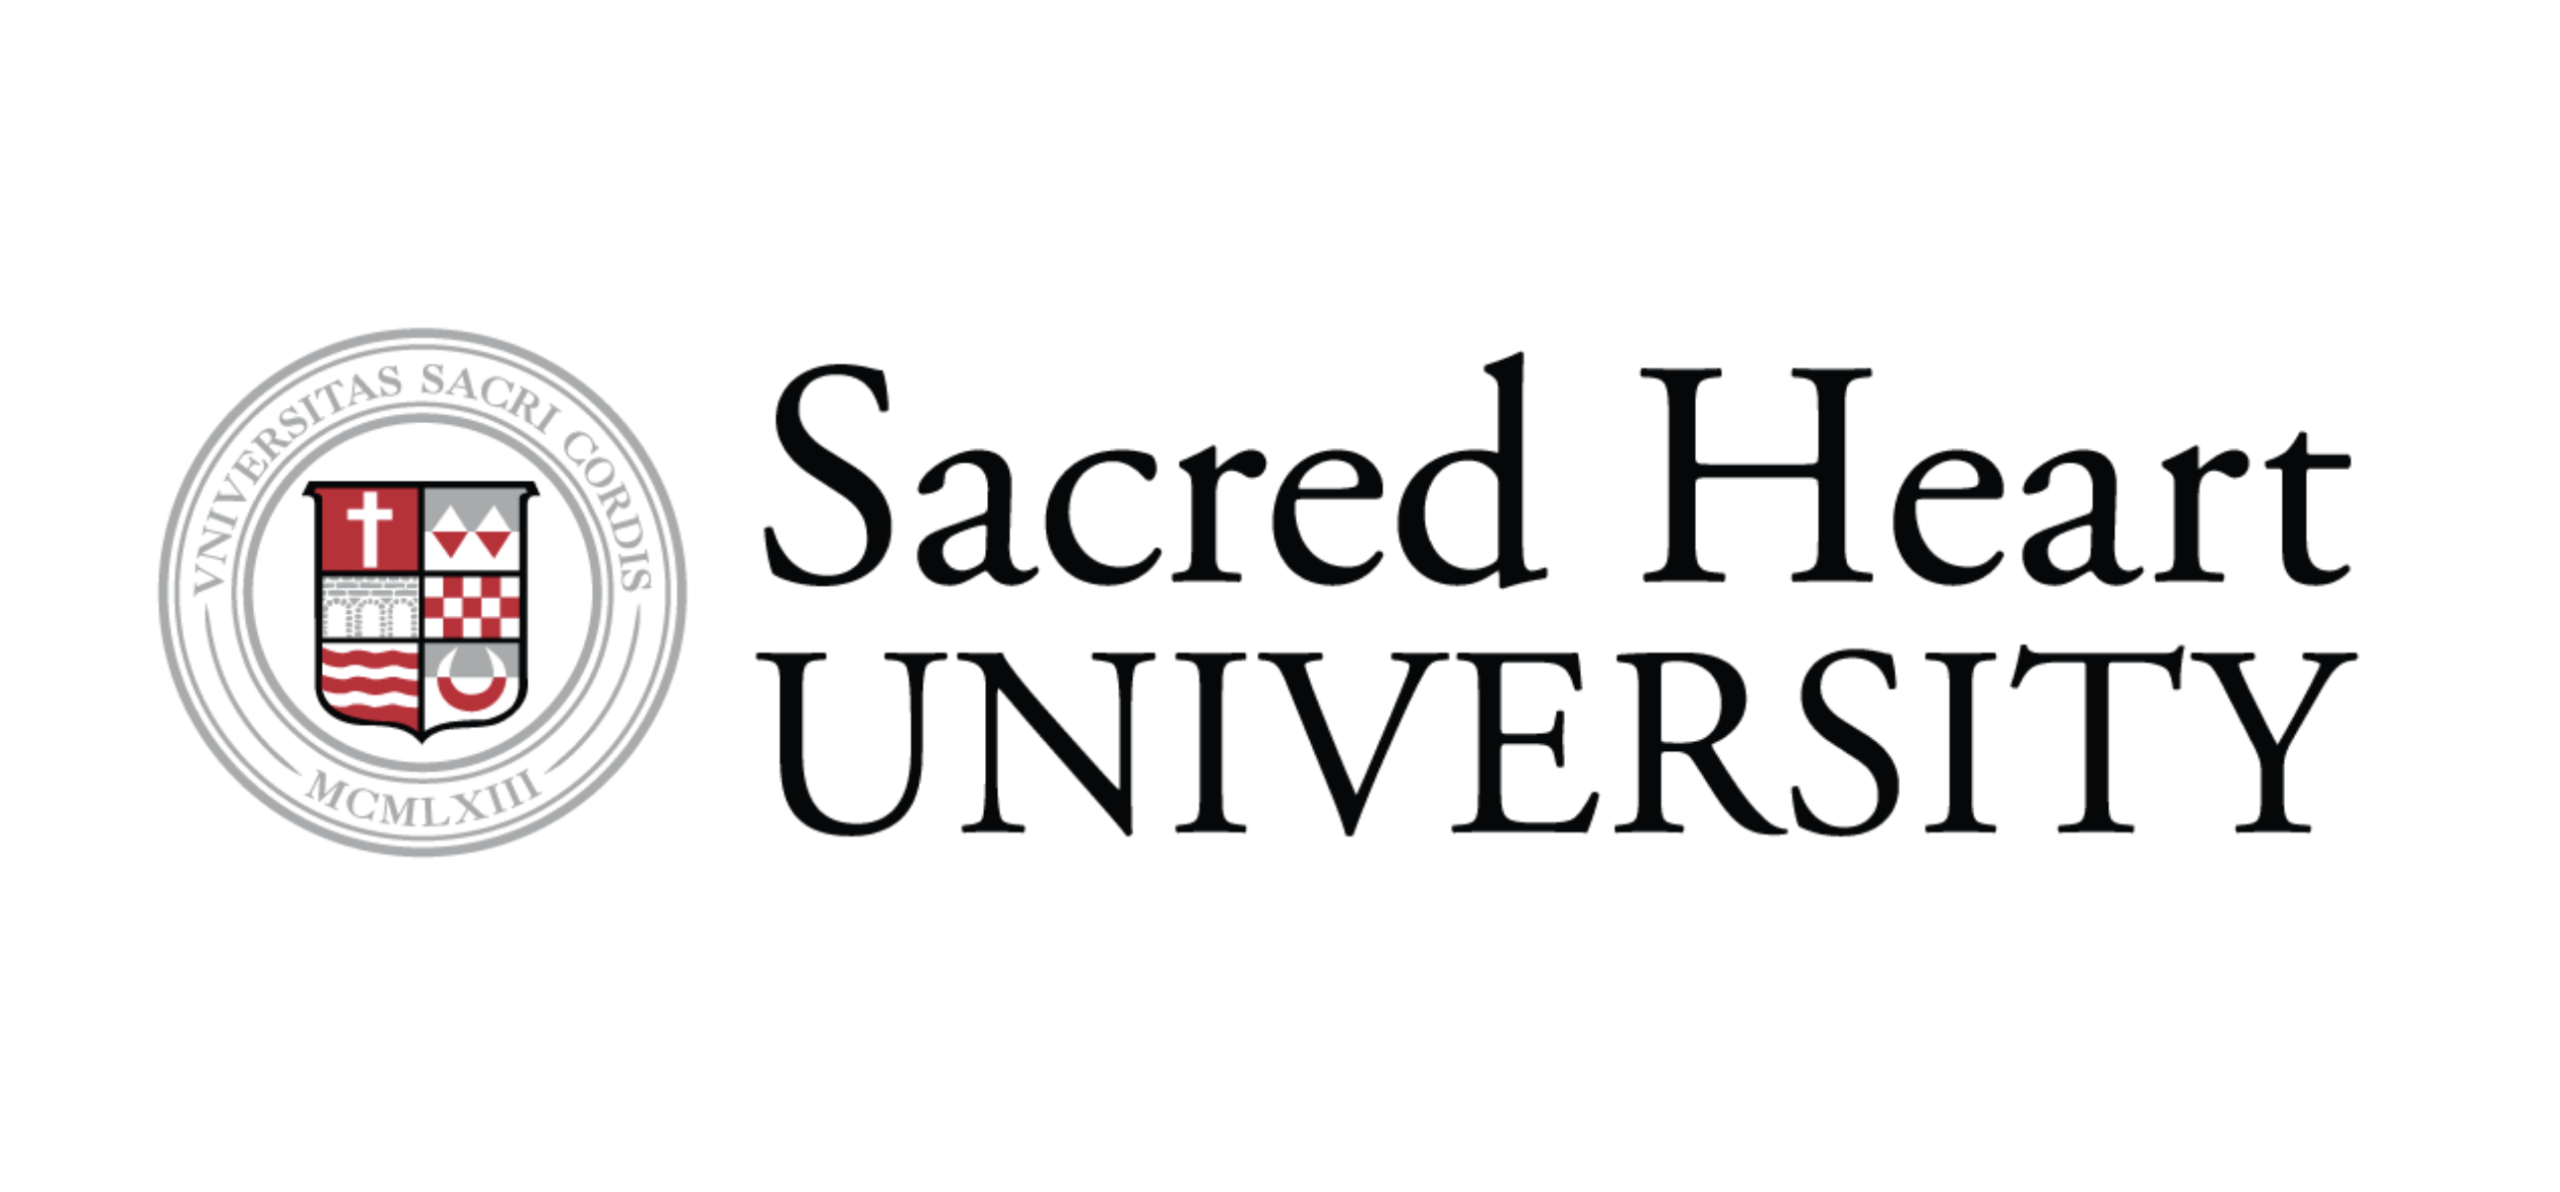 Sacred Heart University campus visit